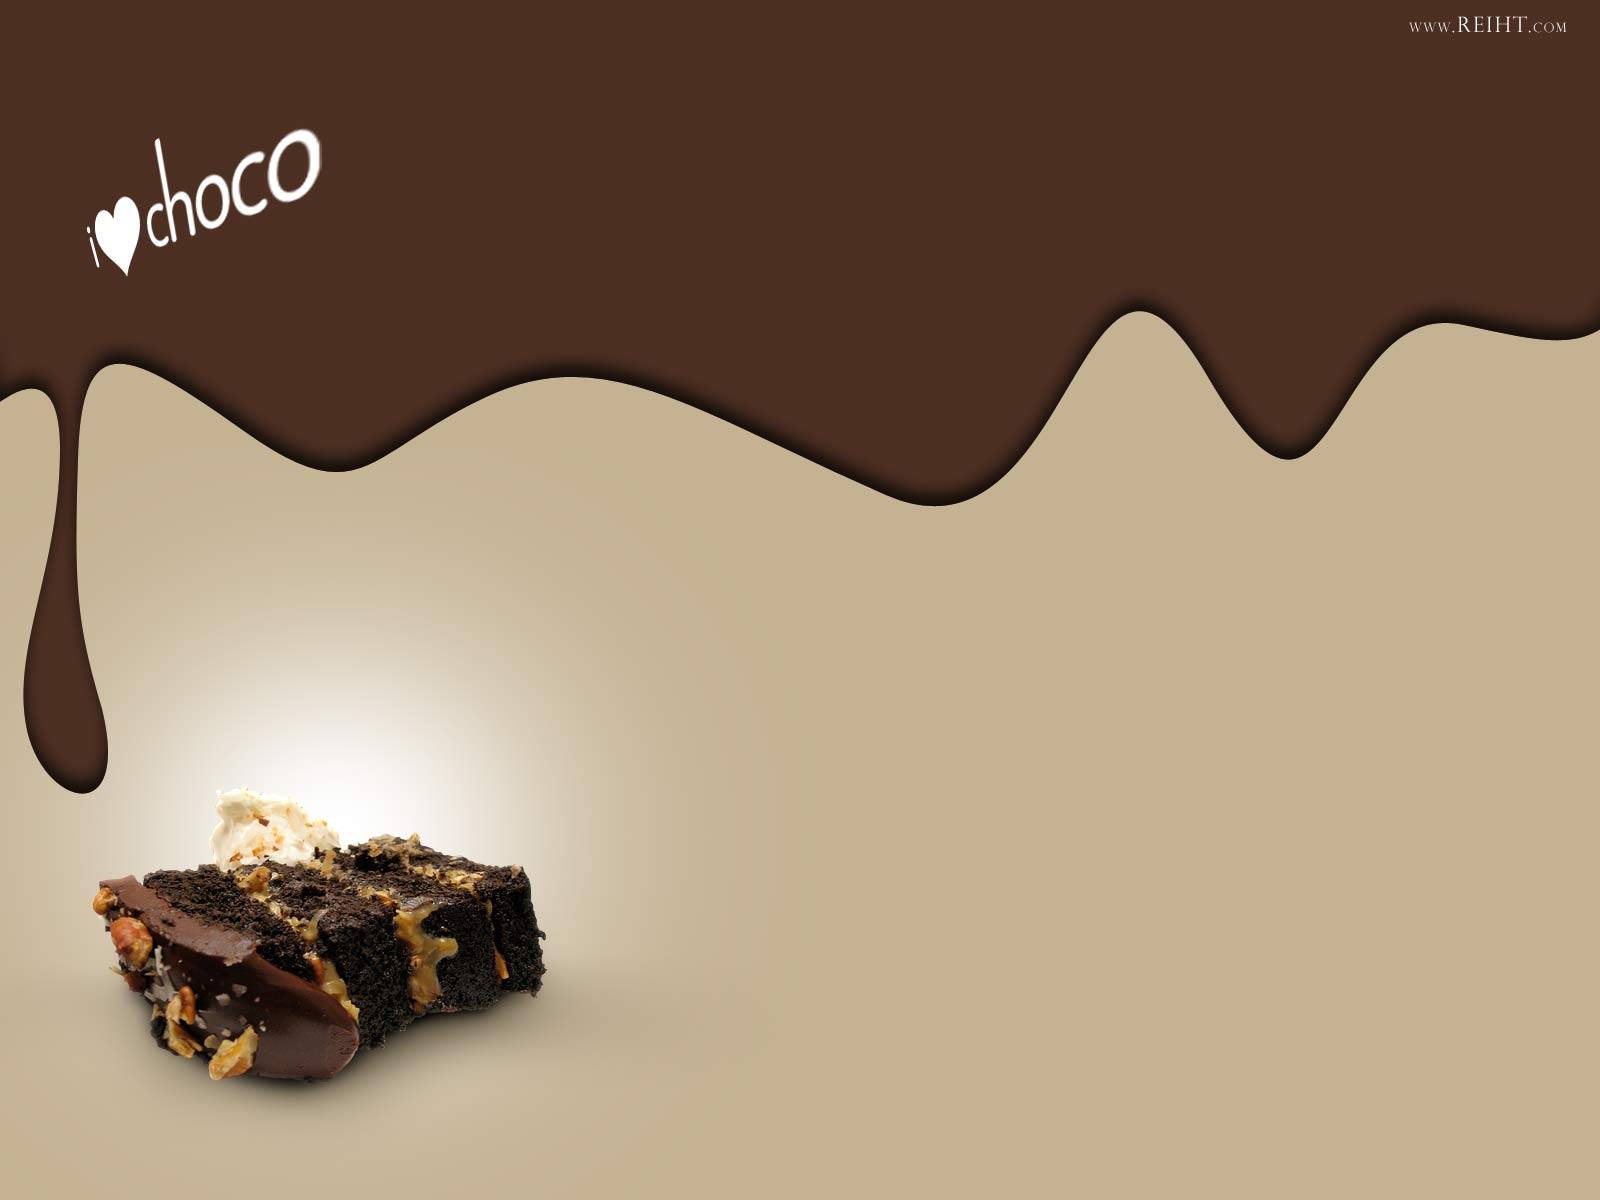 A chocolate bar with a piece of chocolate cake - Chocolate